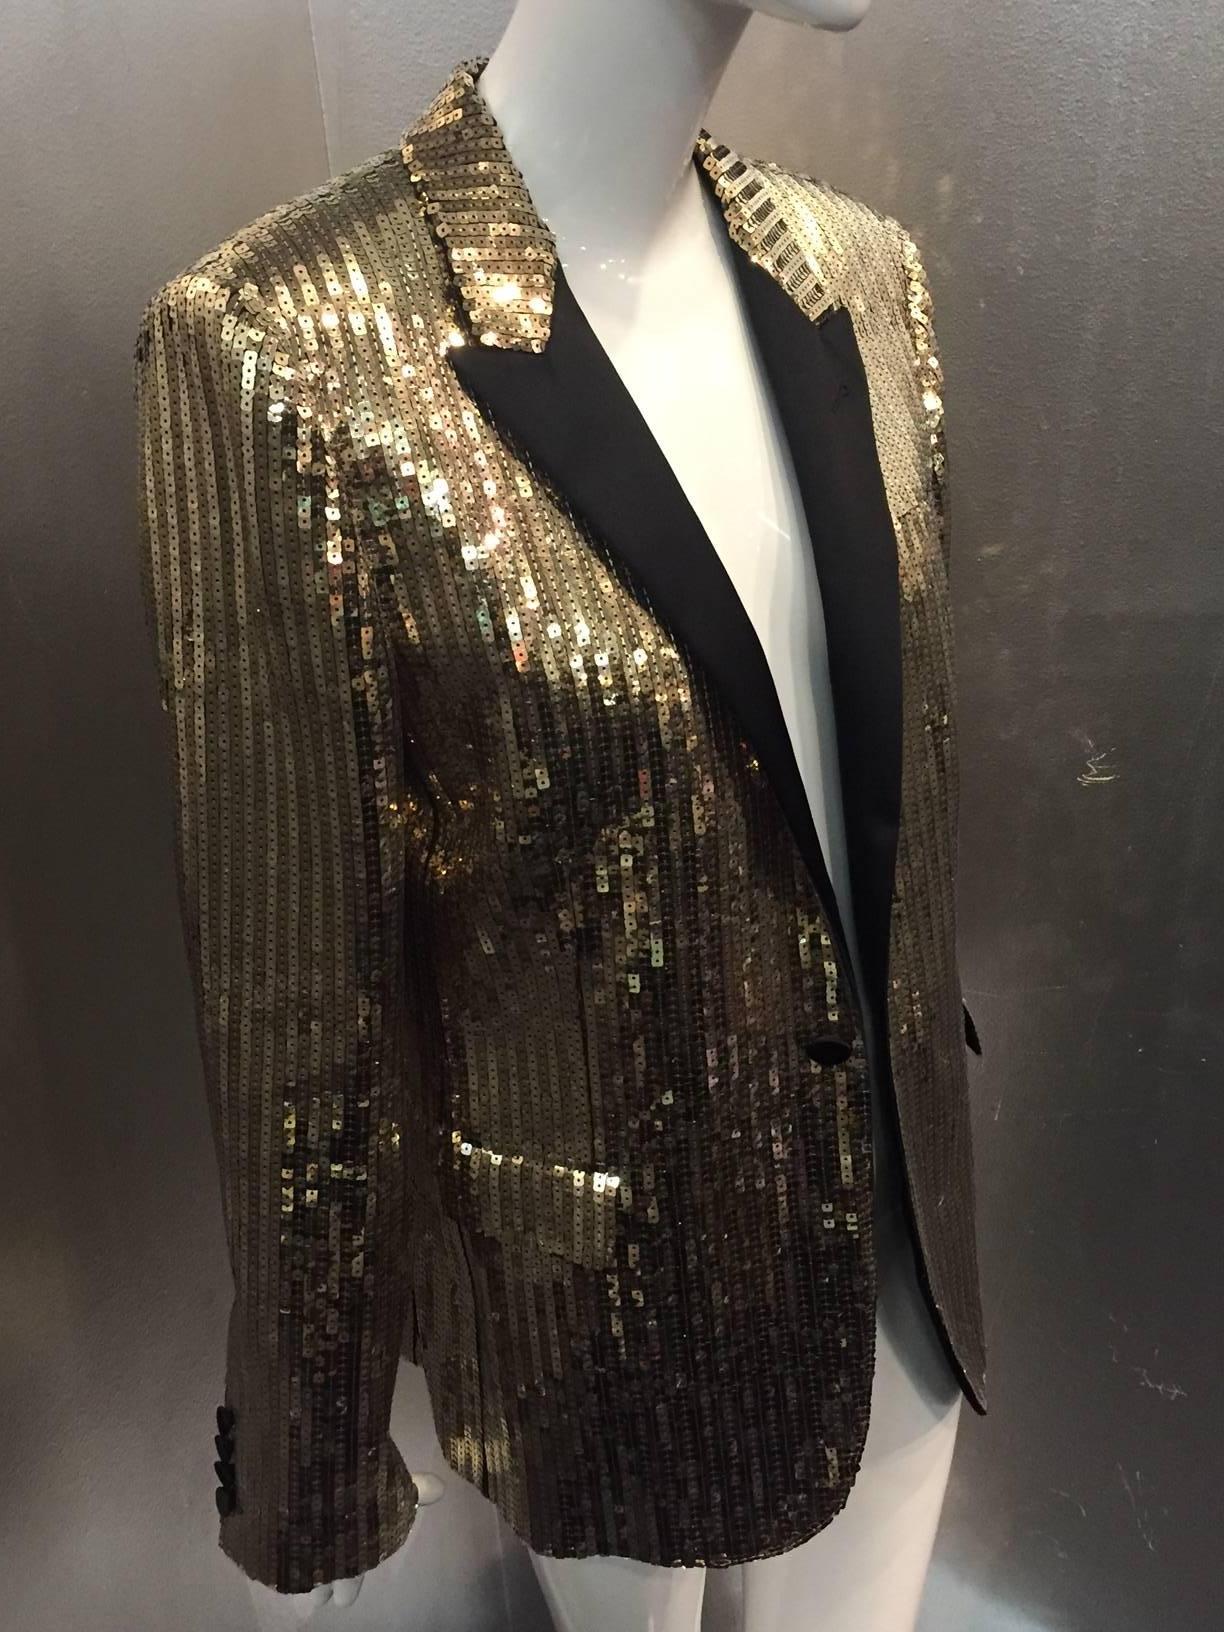 A fabulous Hedi Slimane for Saint Laurent menwear gold sequin tuxedo jacket with satin lapels!  Single button style with flap pockets. 